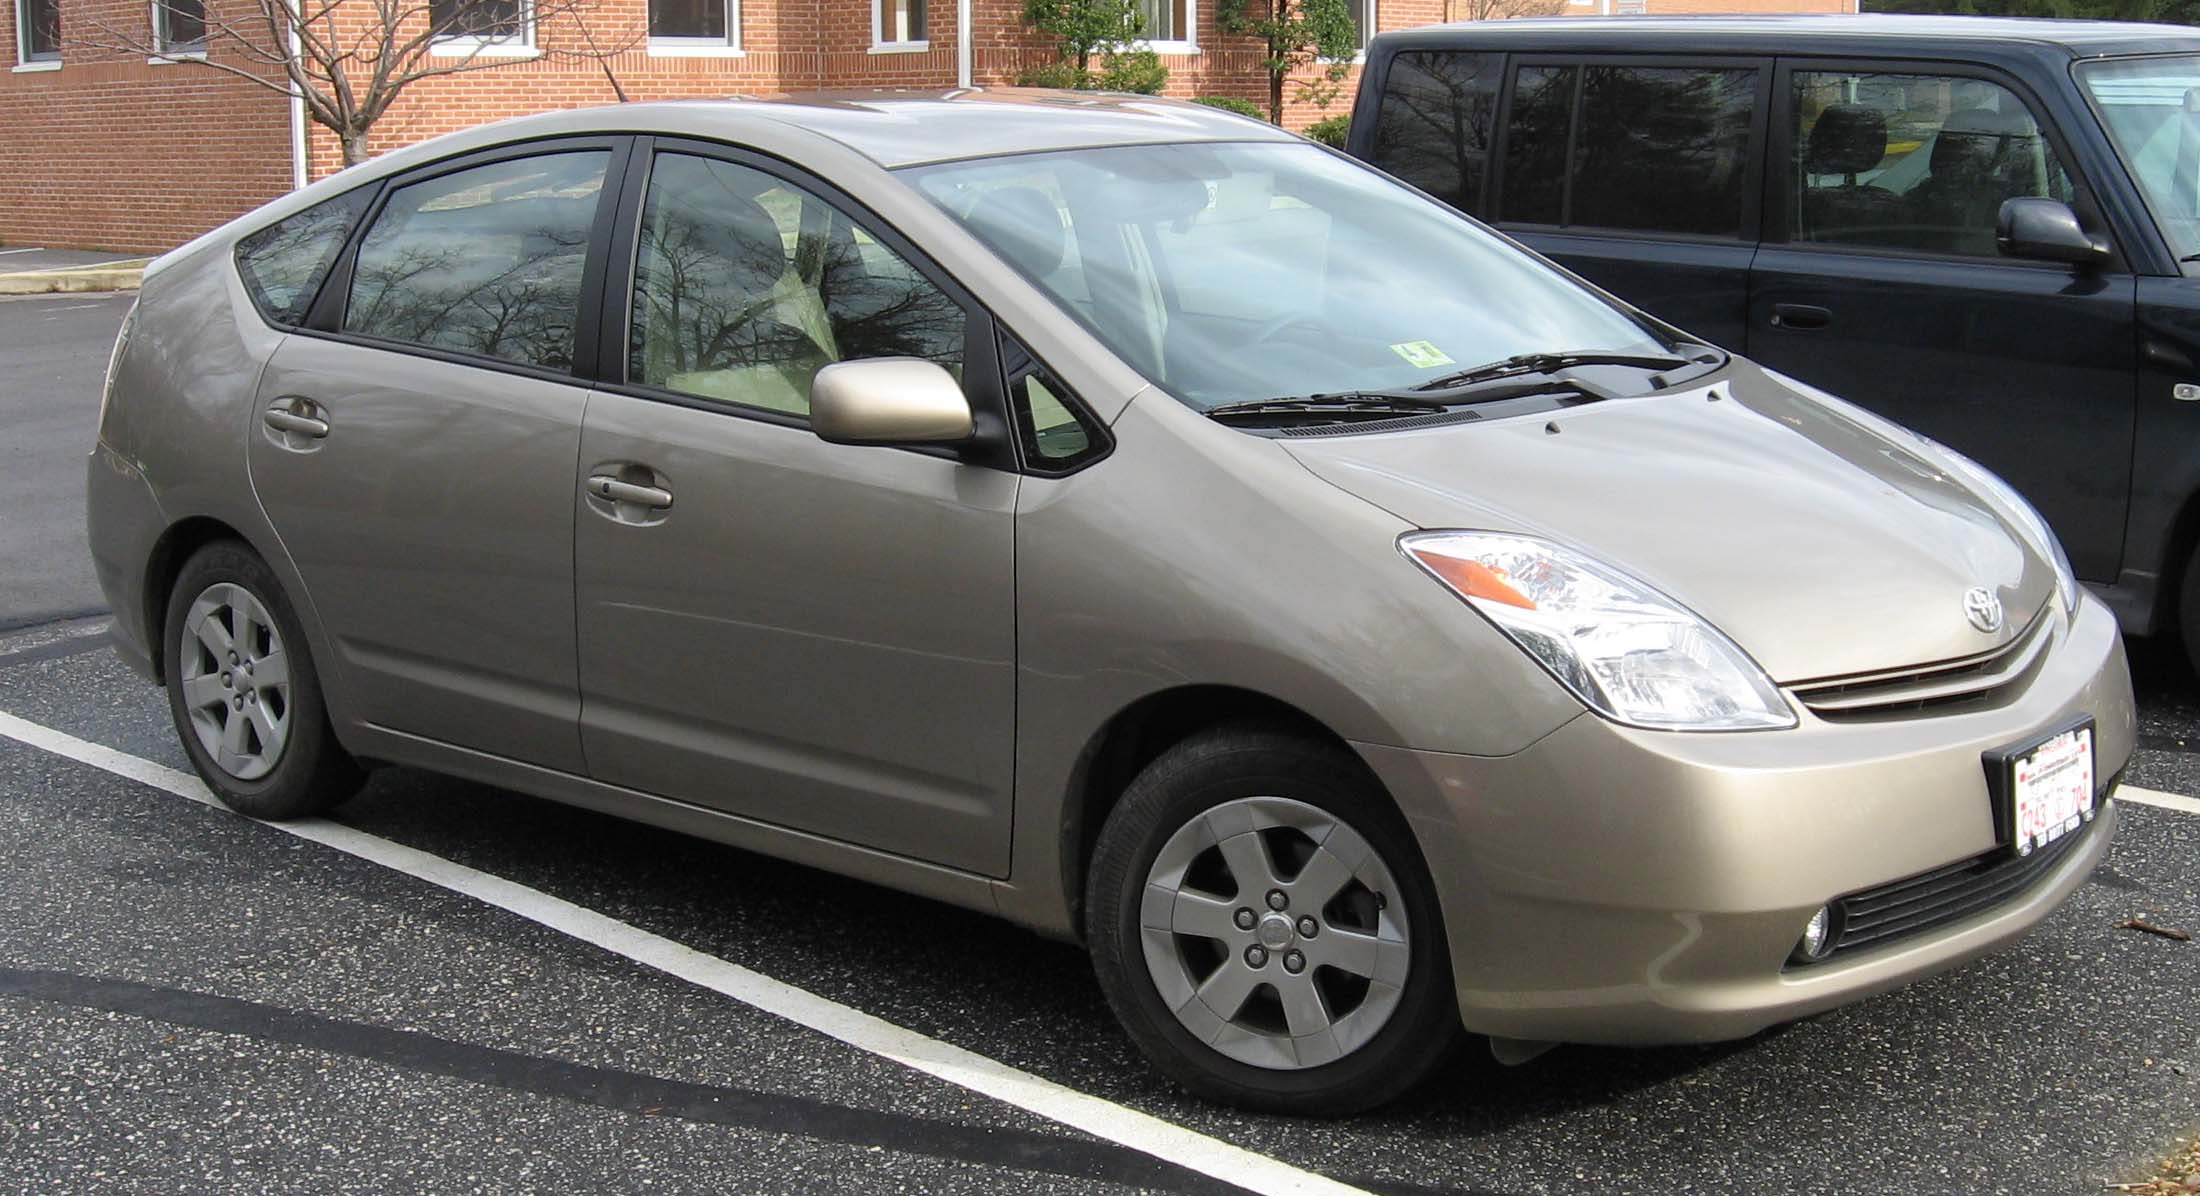 File:2005-Toyota-Prius.jpg - Wikimedia Commons